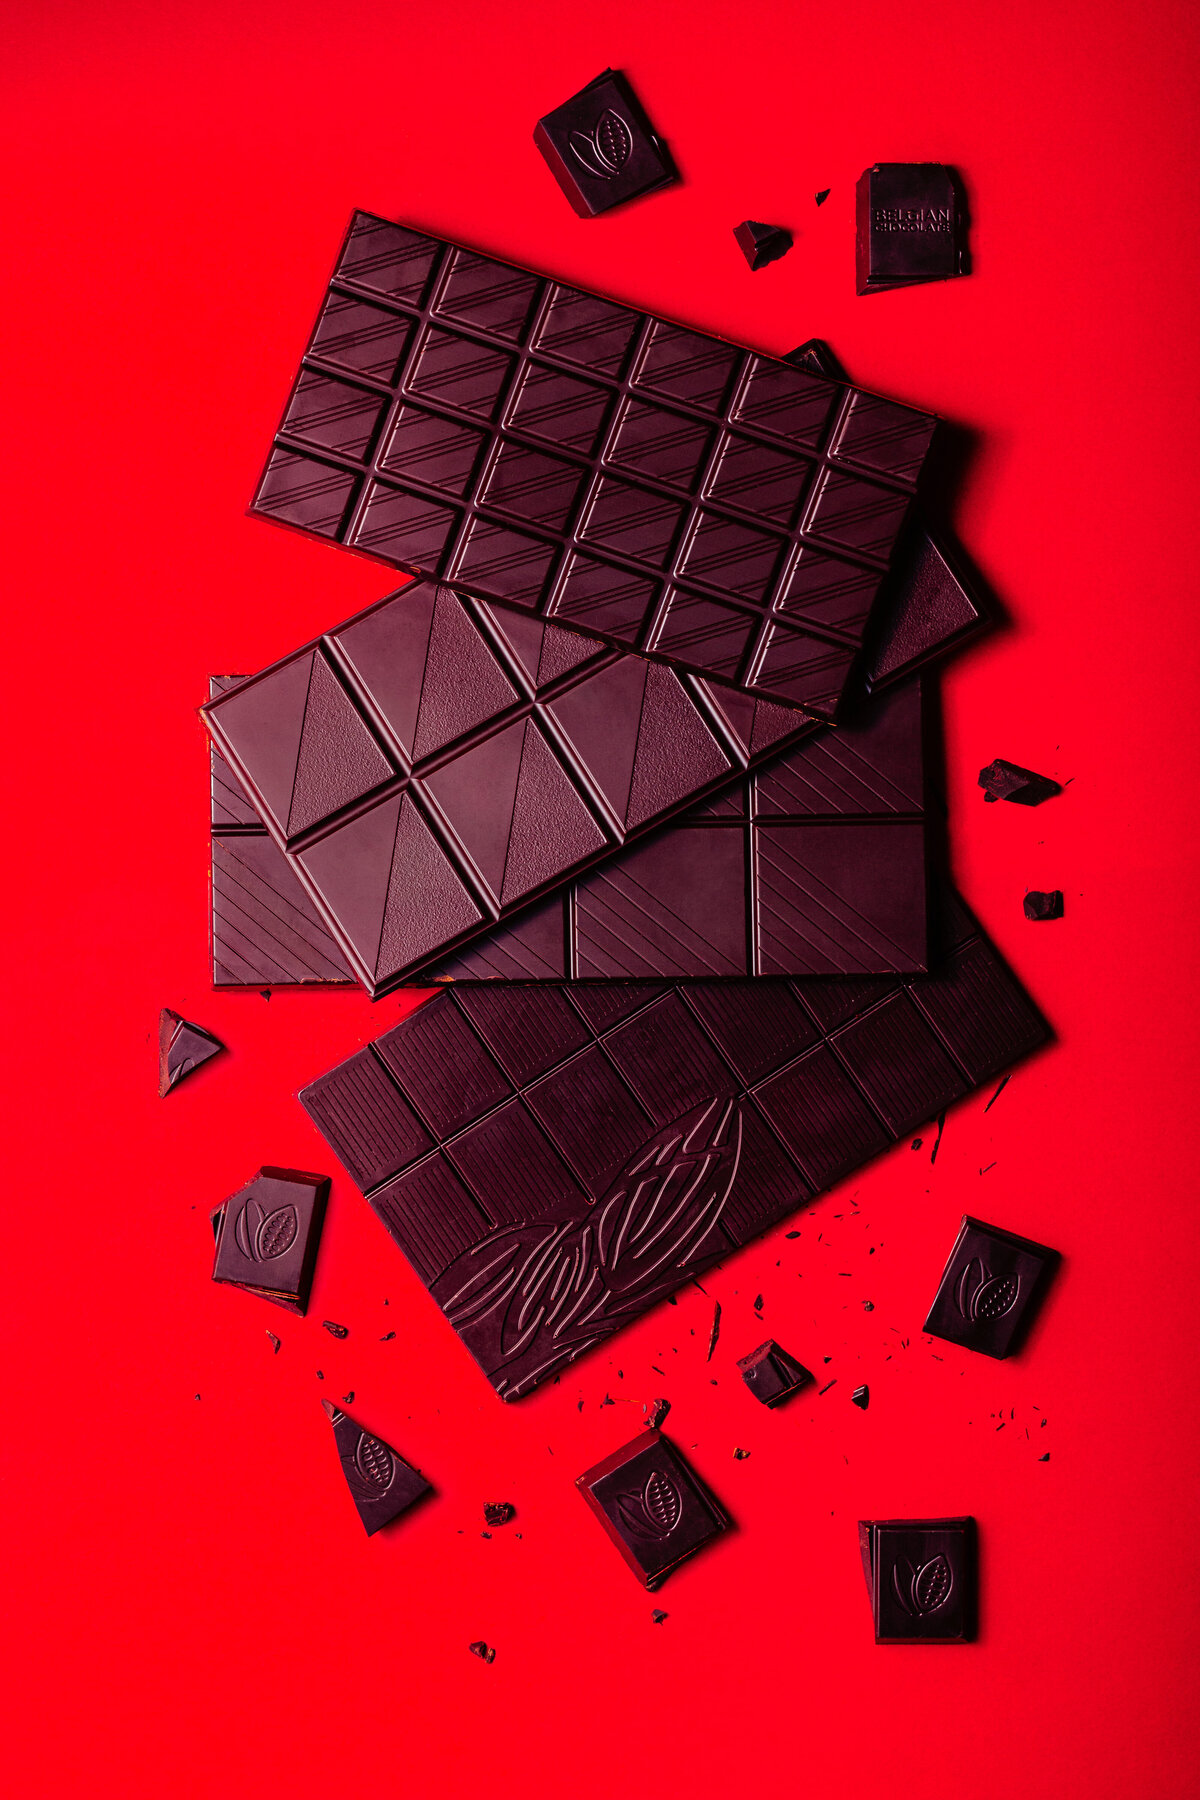 Belgian Chocolate Coloricious Food Photography